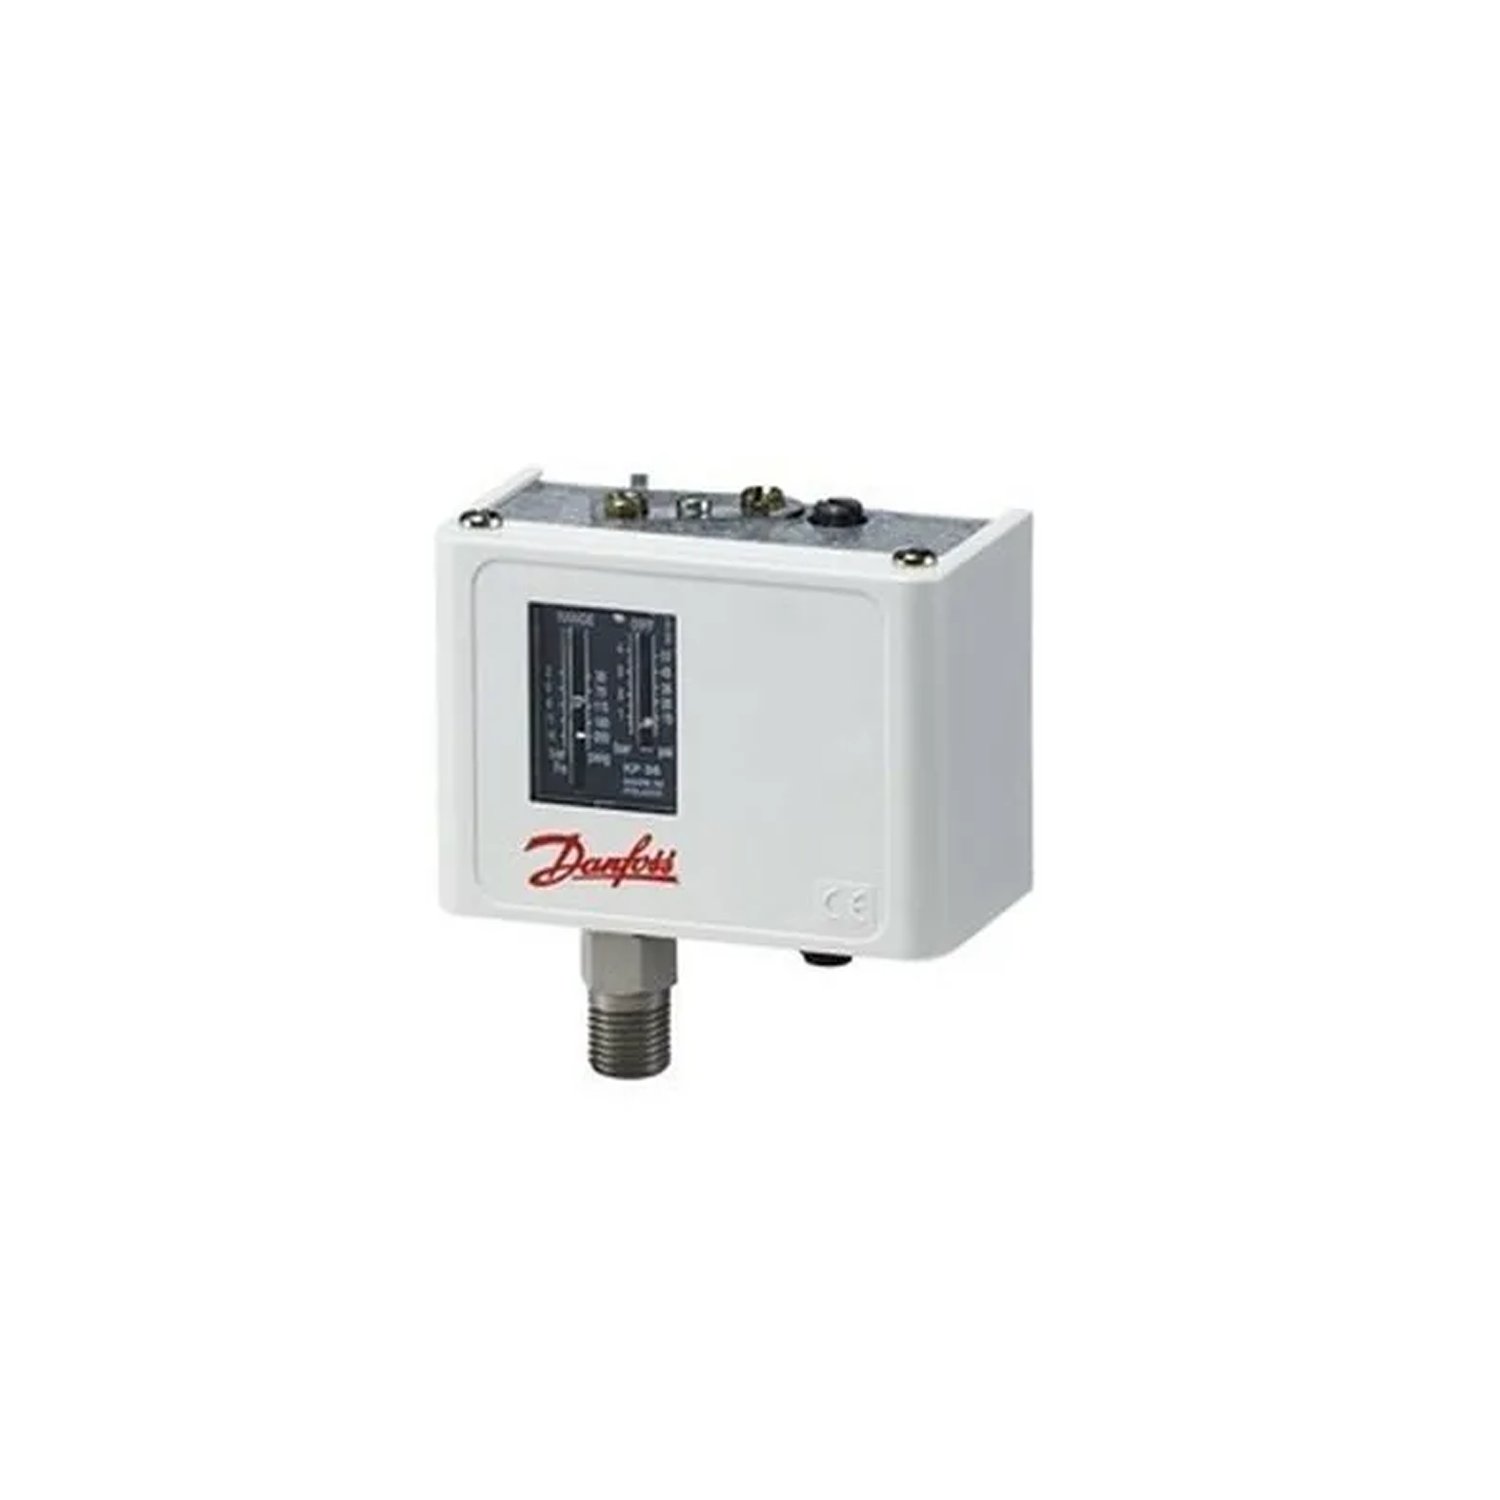 Pressure switch DANFOSS KP5 60-5133 Pressure connection vertical, manual reset